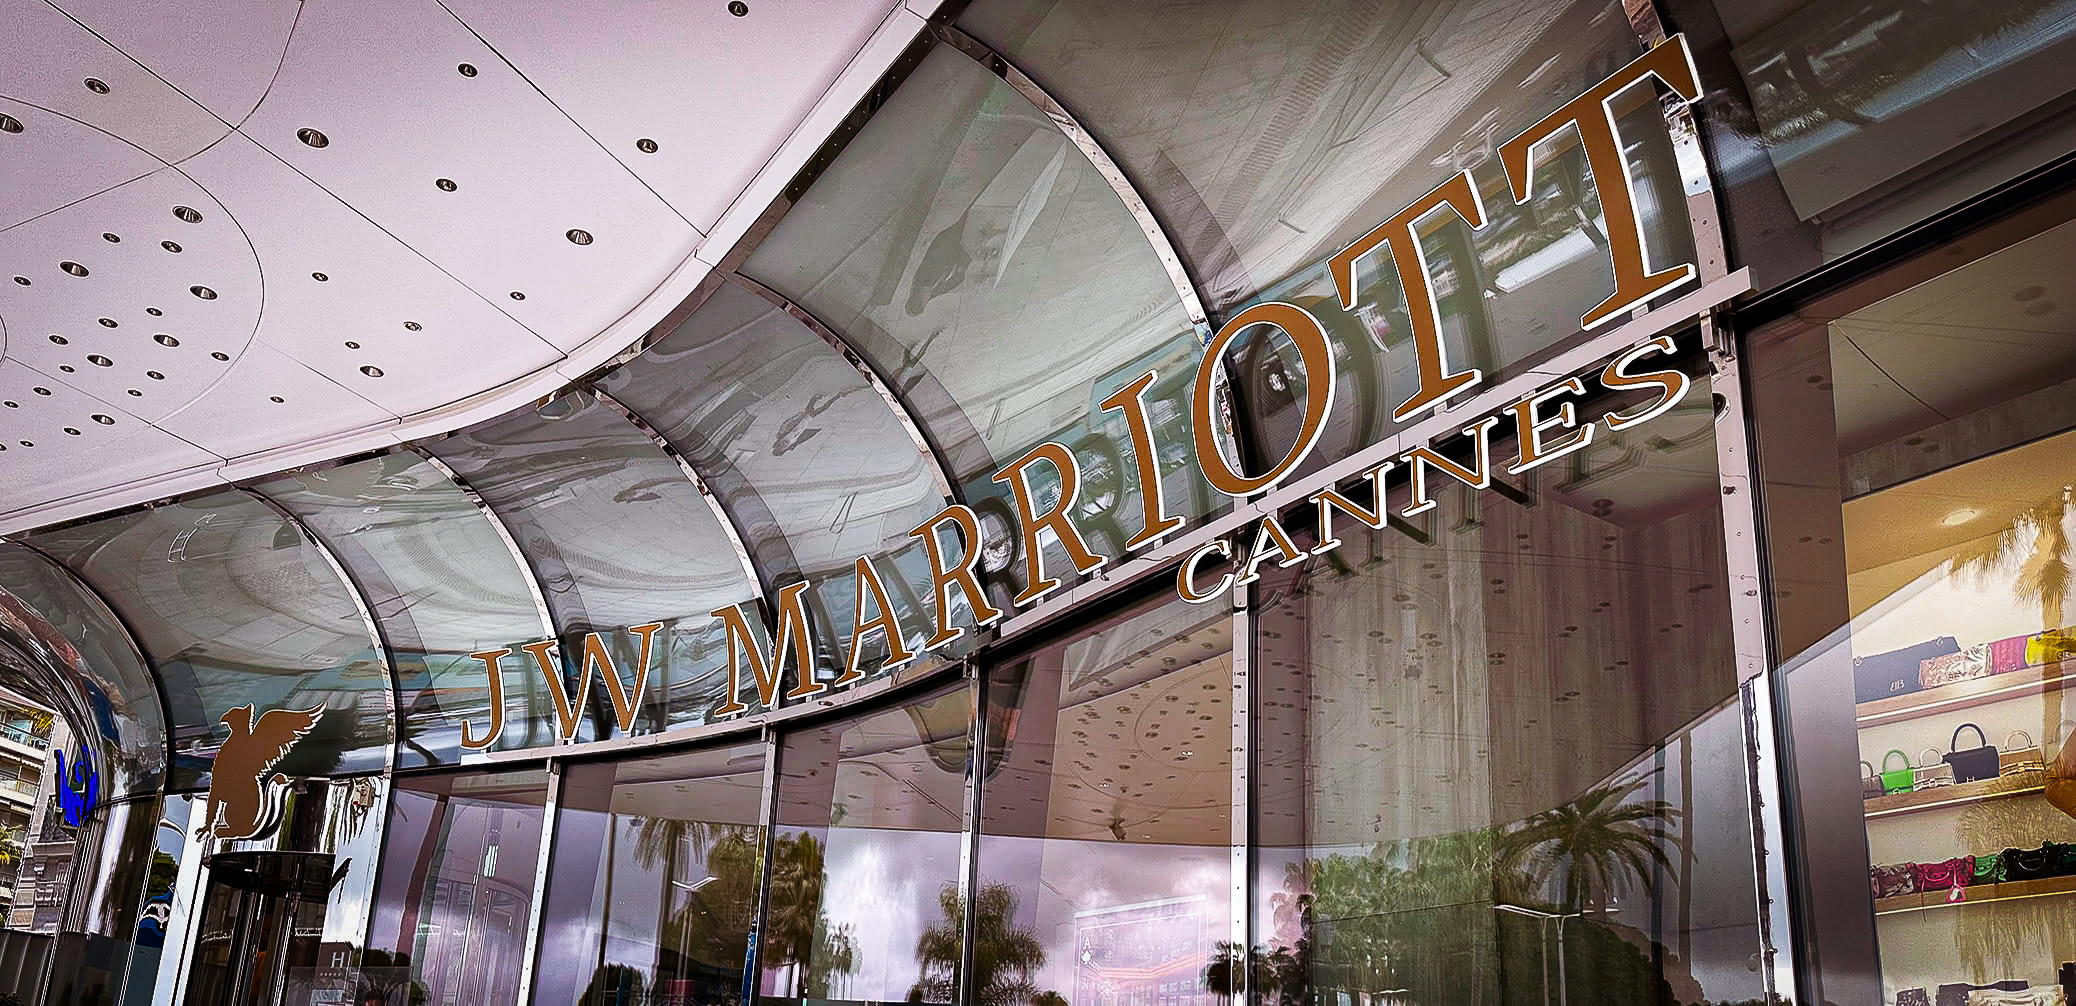 JW Marriott Cannes Vs. Hotel Martinez